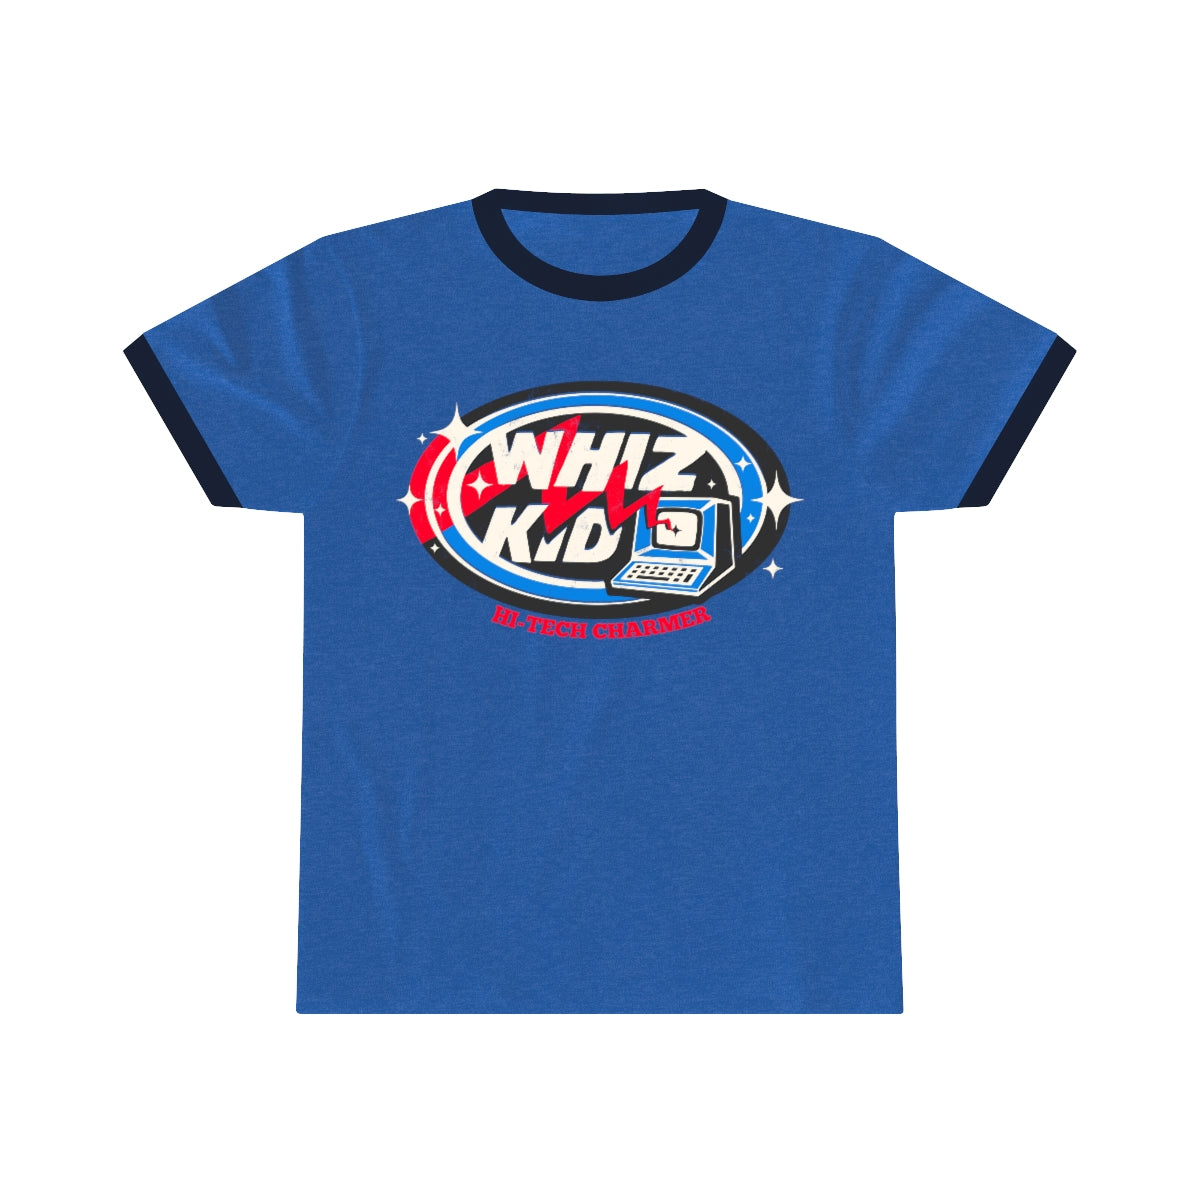 Whiz Kid Hi-tech Charmer | Retro Geek T-Shirt